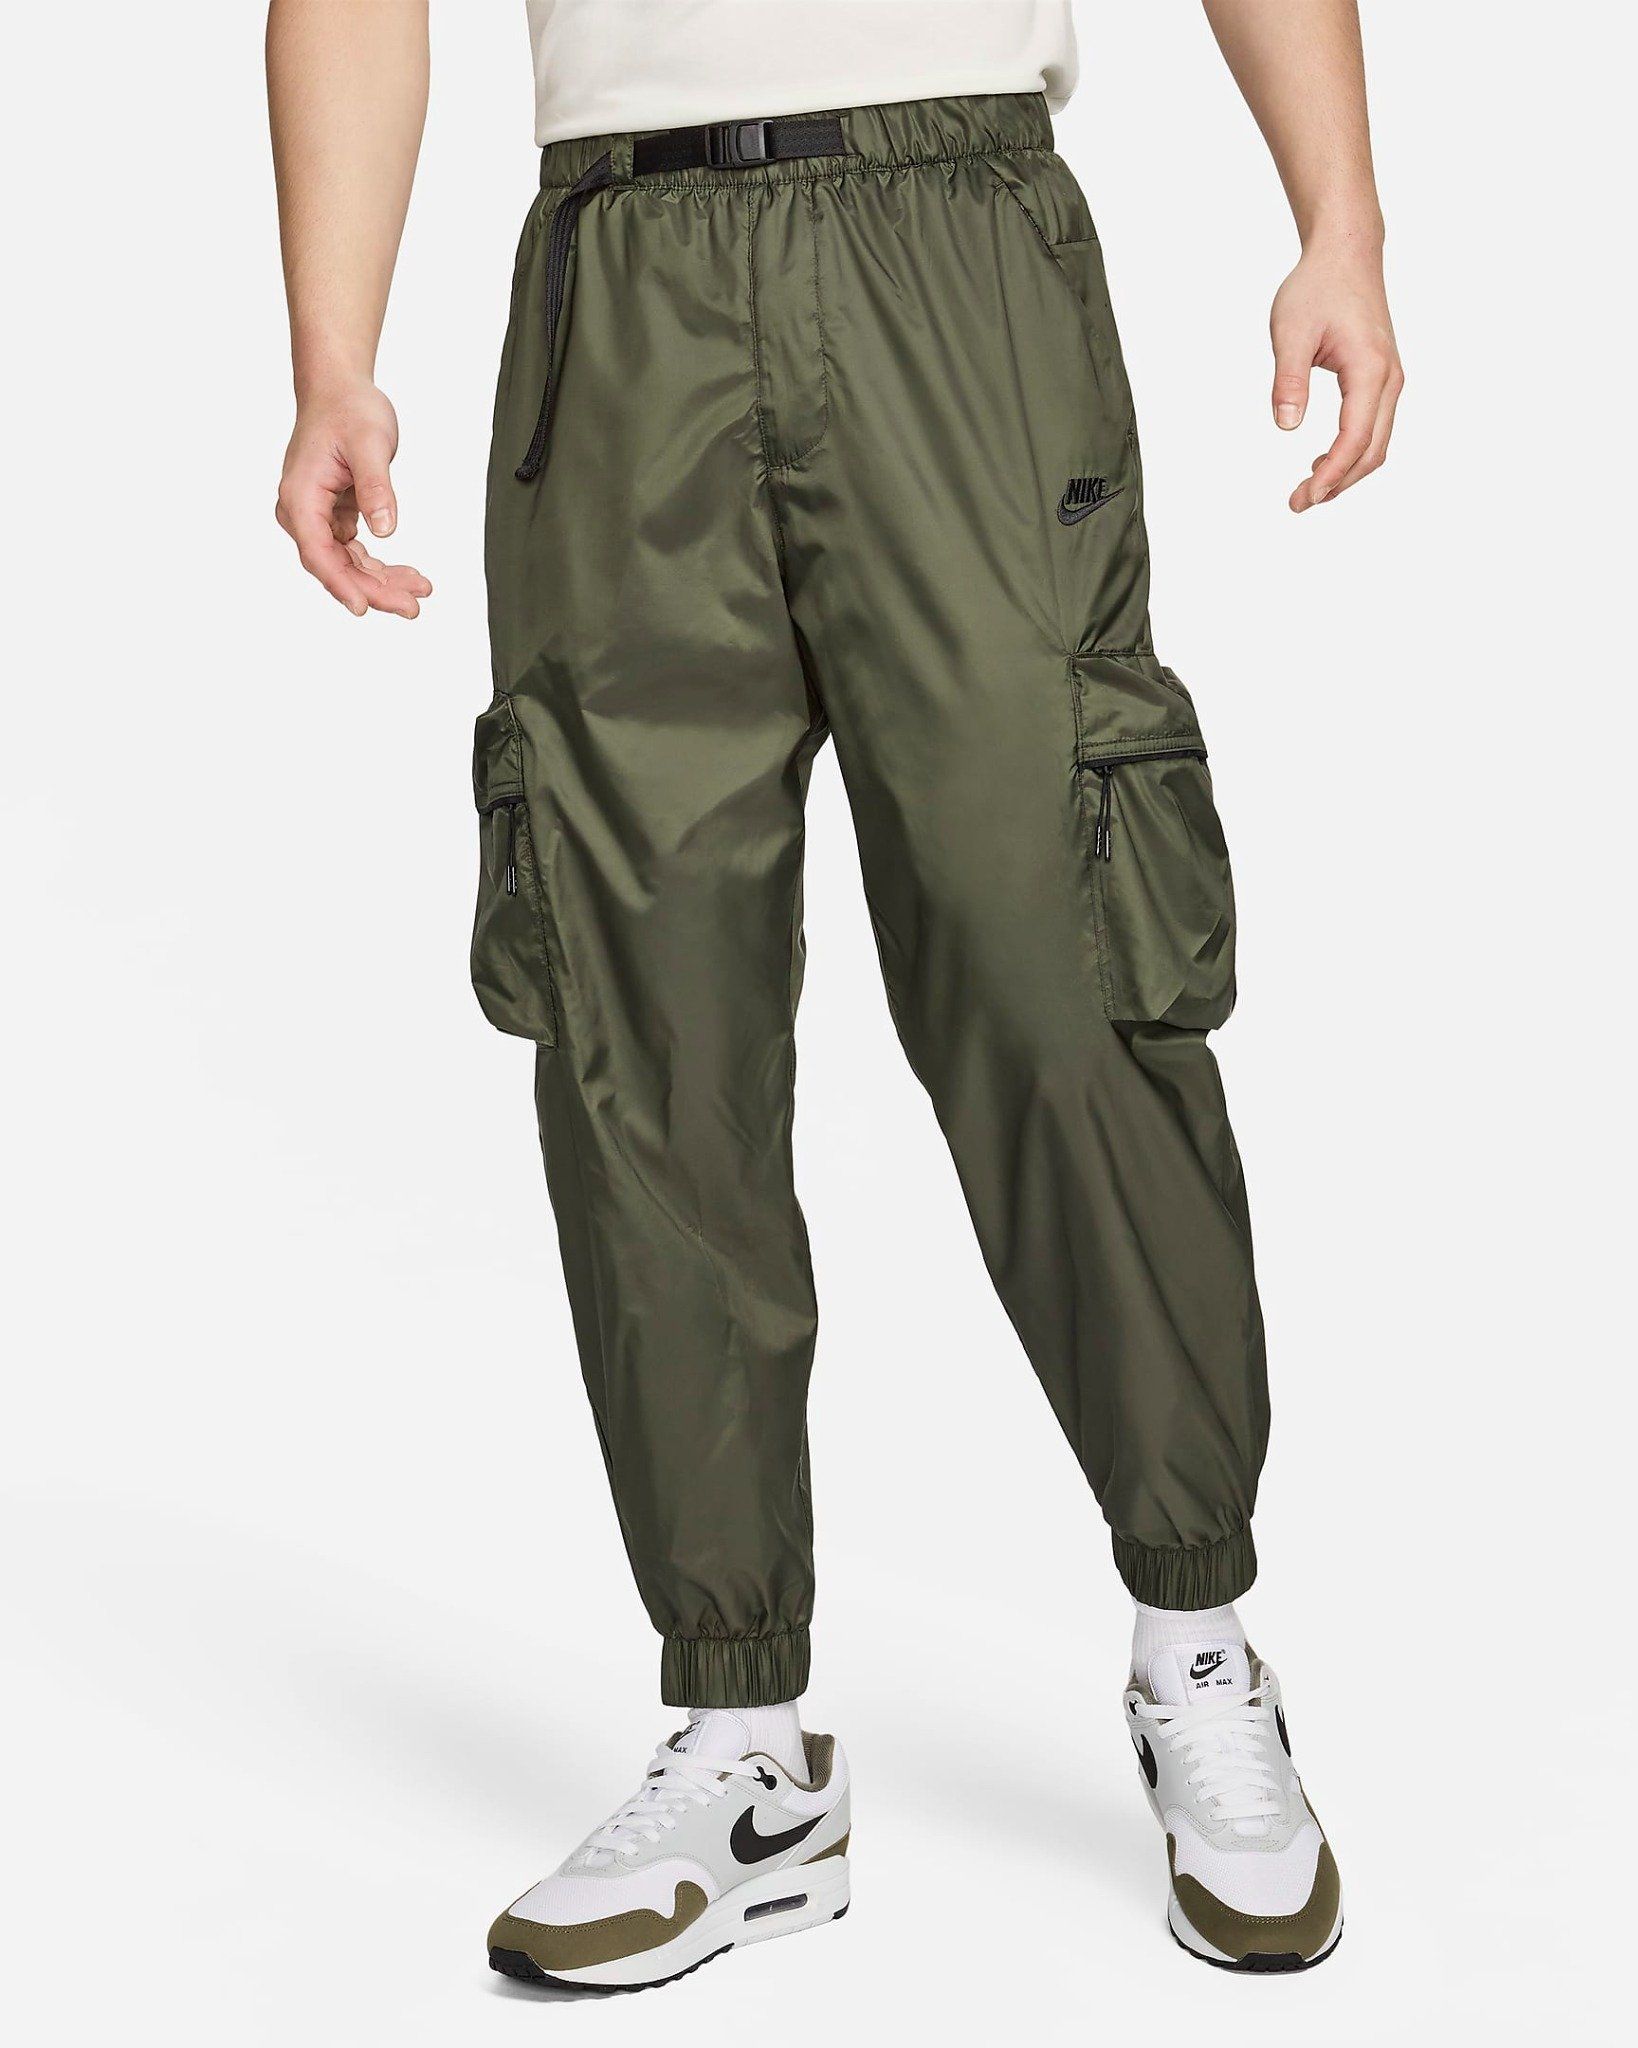 Nike - Quần Dài Thể Thao Nam Nike Tech Men'S Lined Woven Pants